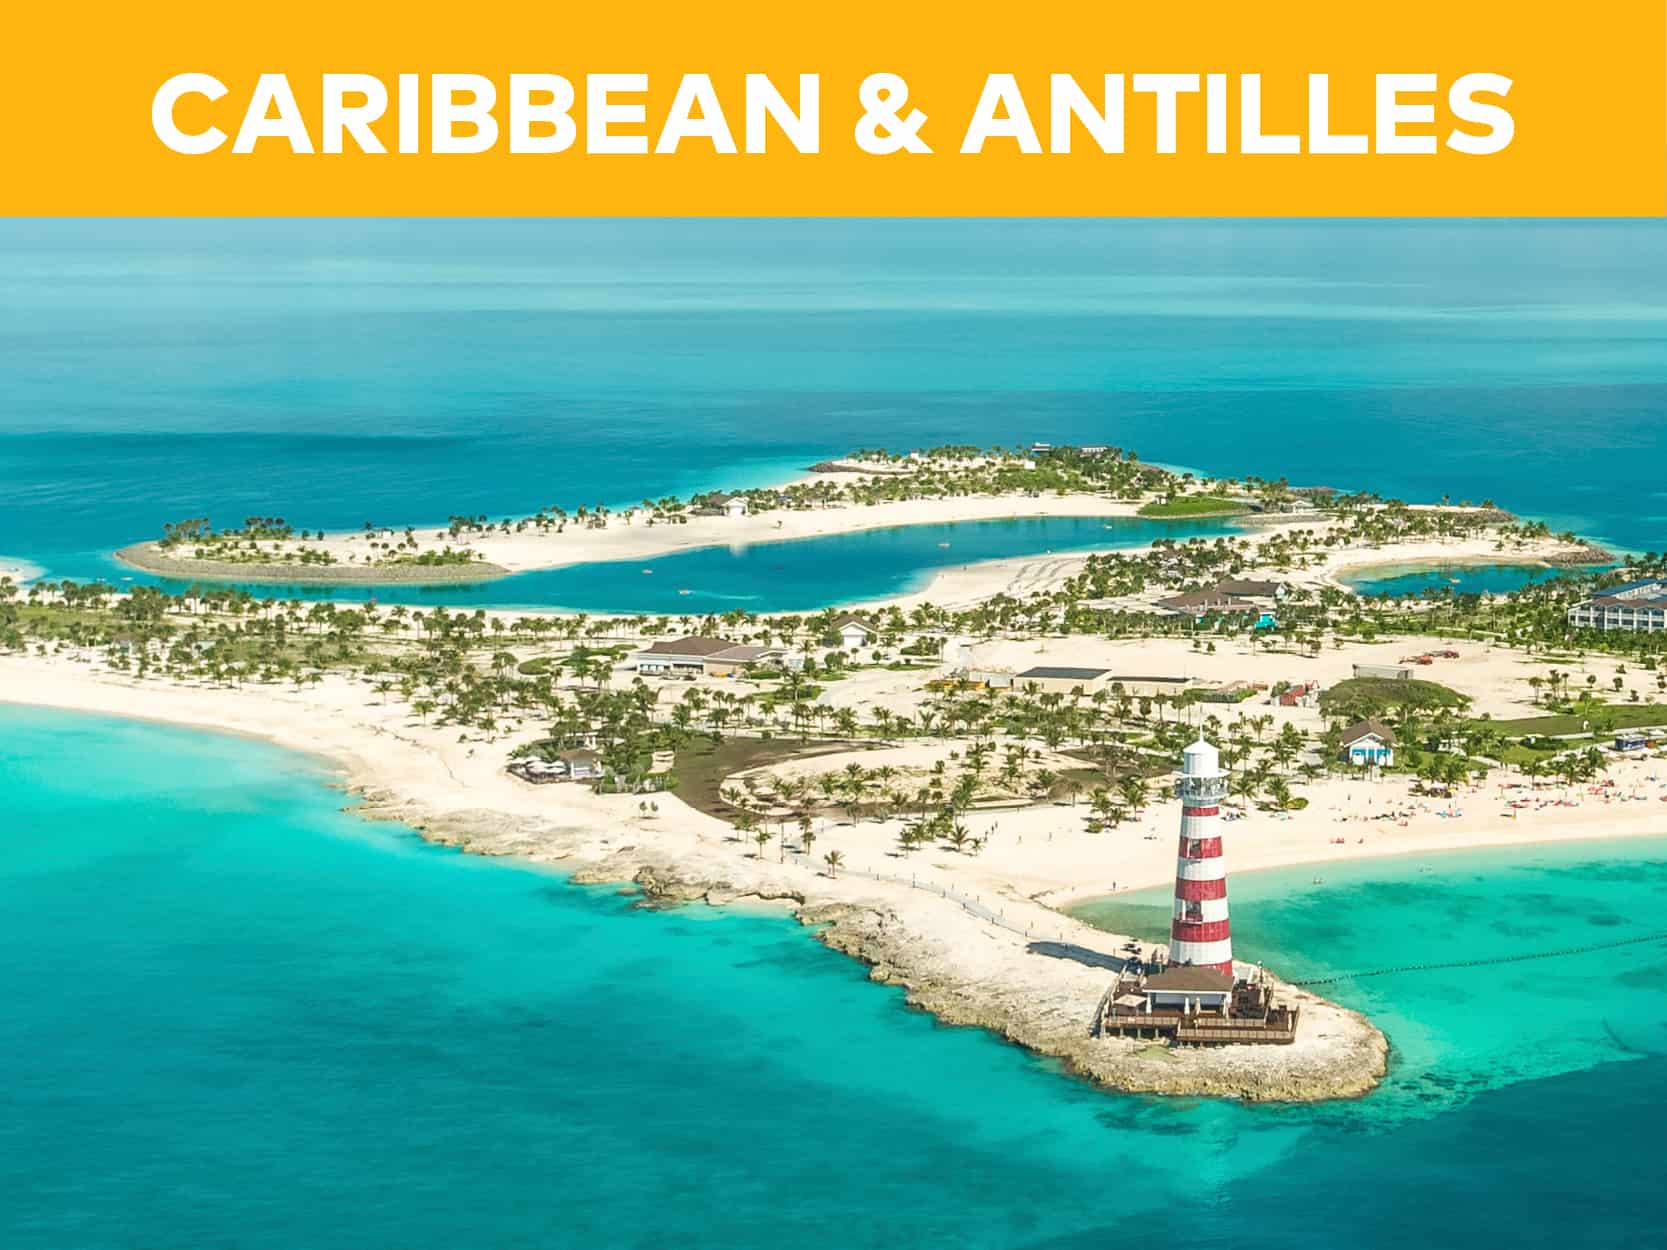 Caribbean & Antilles